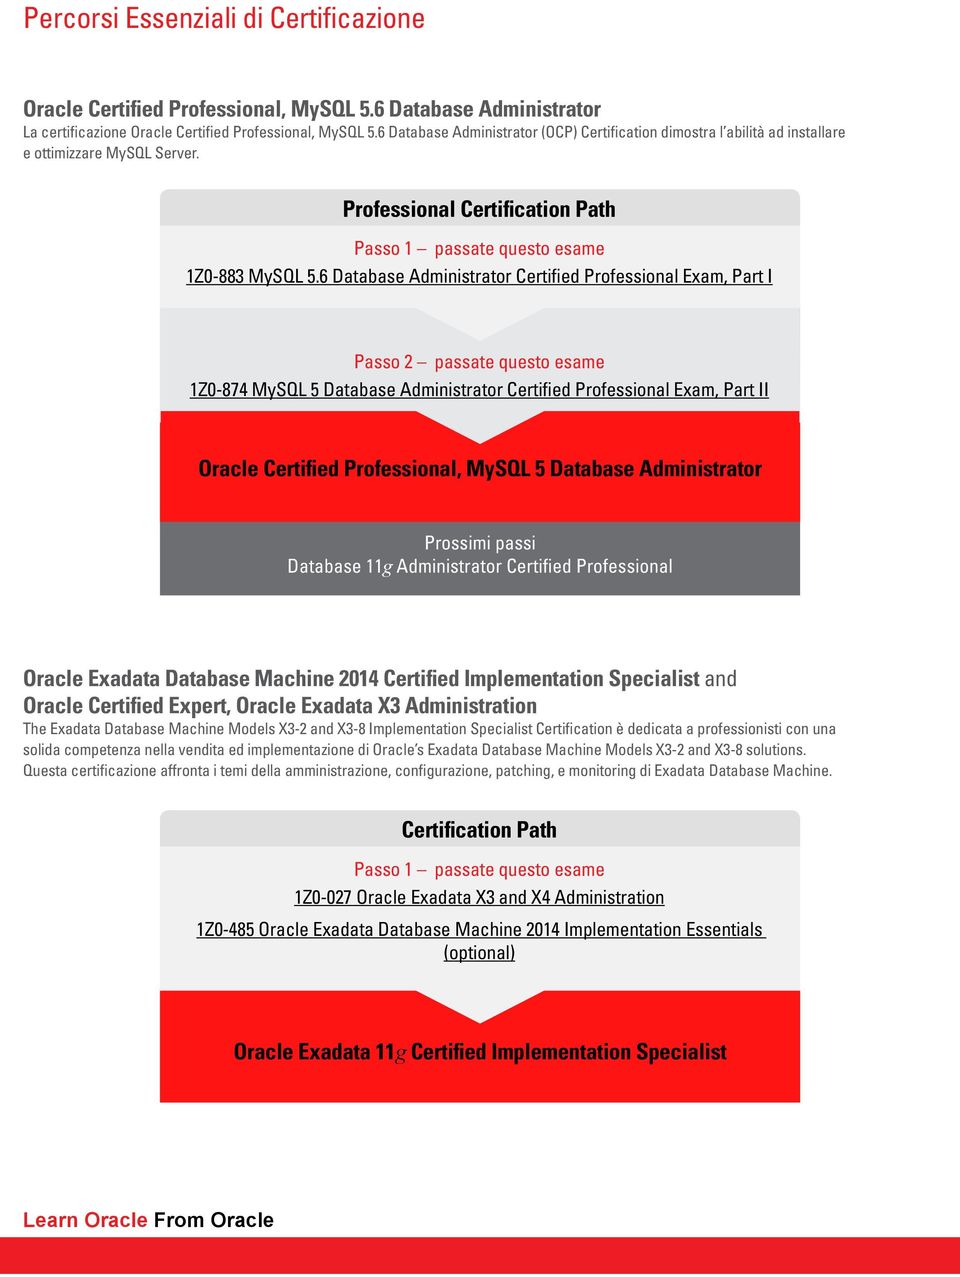 6 Database Administrator Certified Professional Exam, Part I Passo 2 passate questo esame 1Z0-874 MySQL 5 Database Administrator Certified Professional Exam, Part II Oracle Certified Professional,